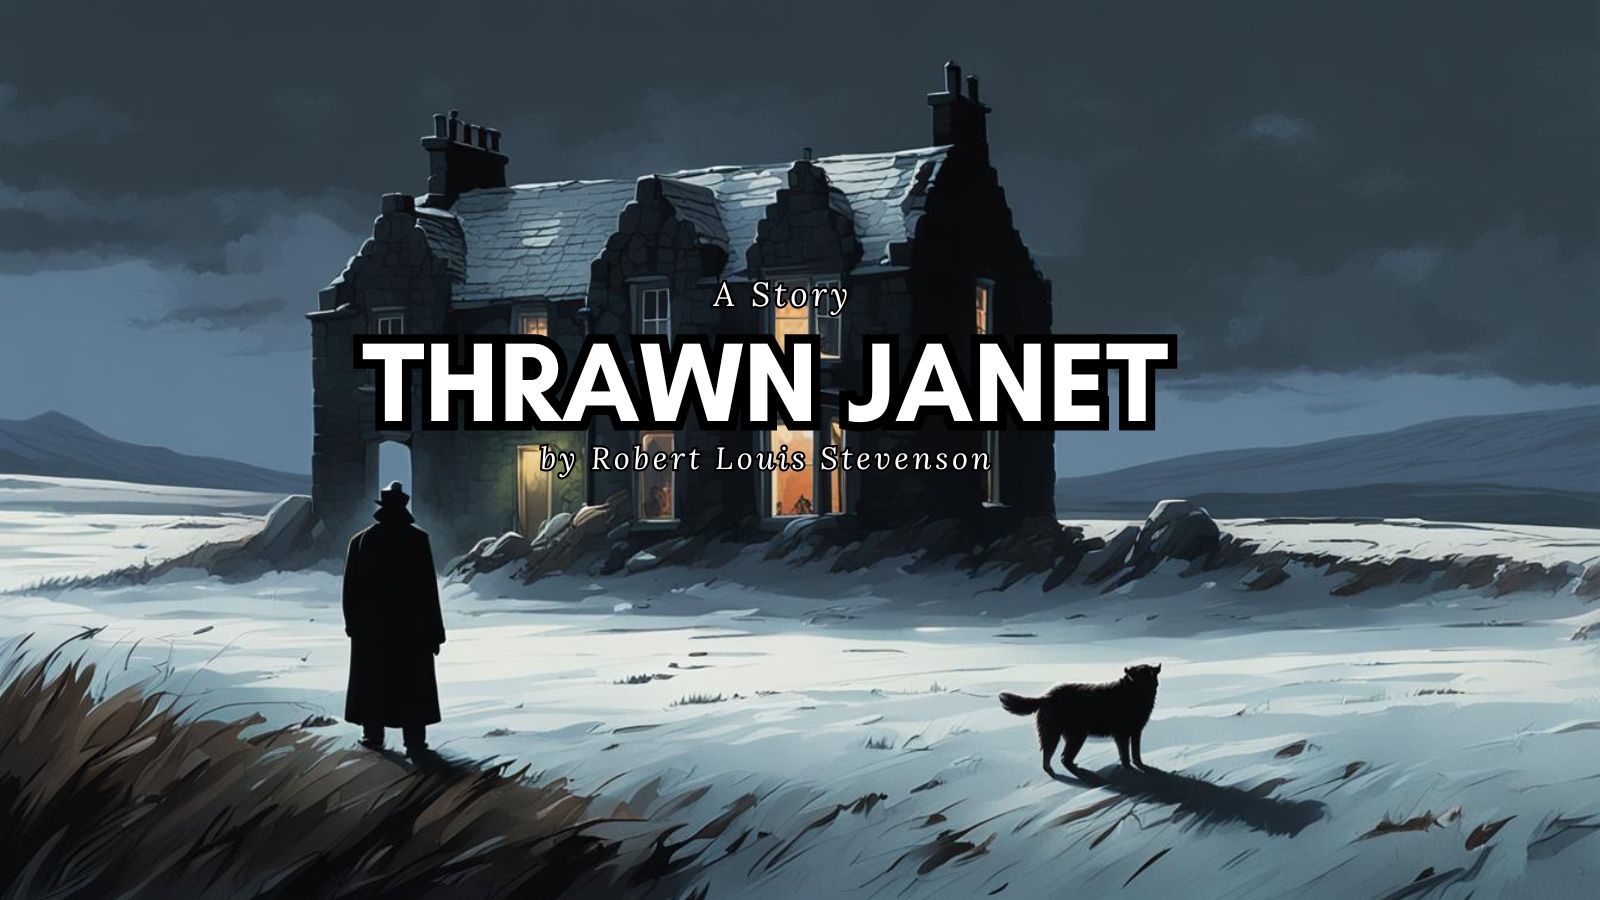 Thrawn Janet by Robert Louis Stevenson